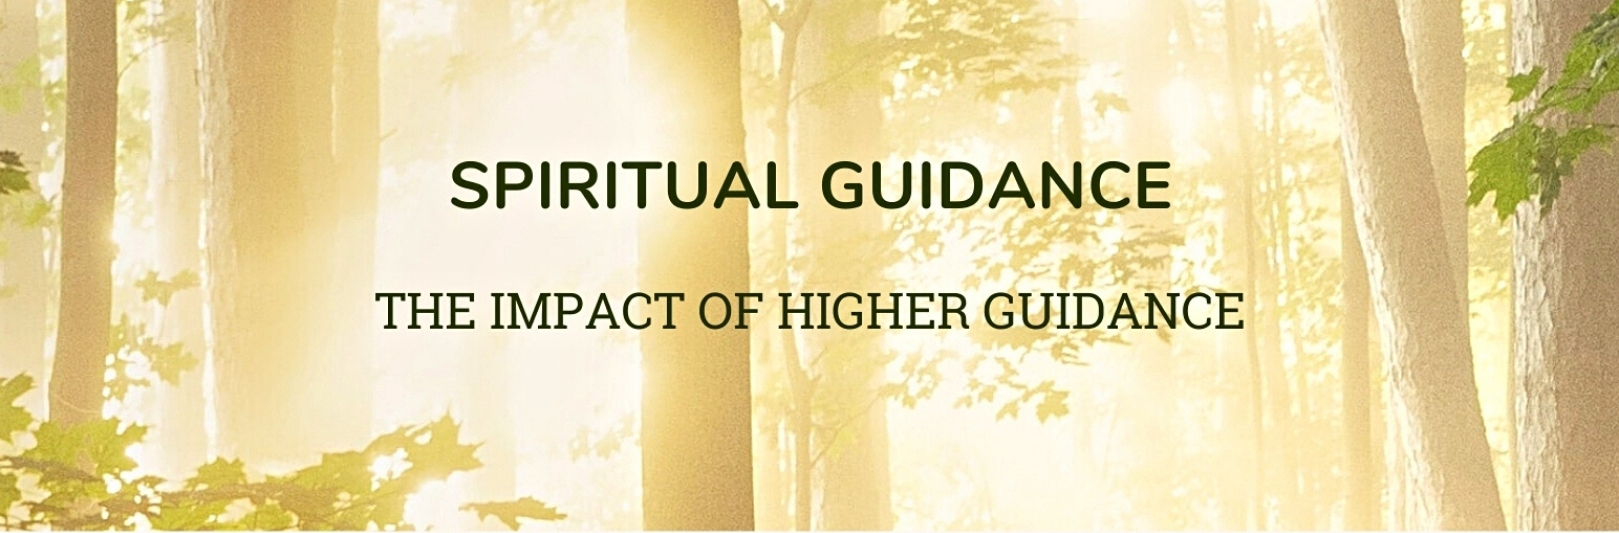 4.  Spiritual Guidance: Intro Goes Here